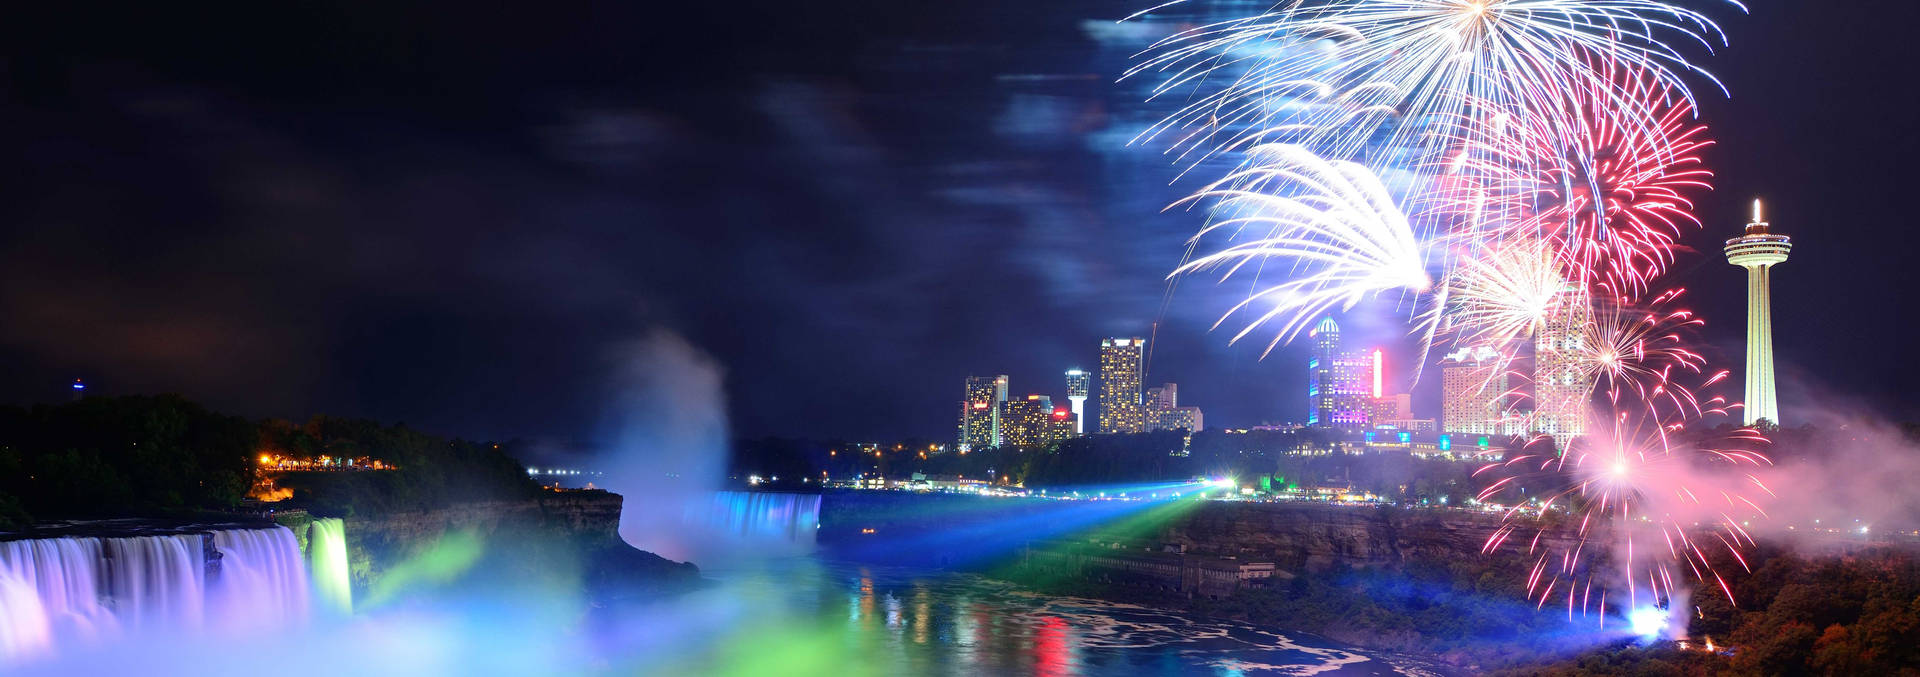 Niagara Falls Fireworks Display Wallpaper